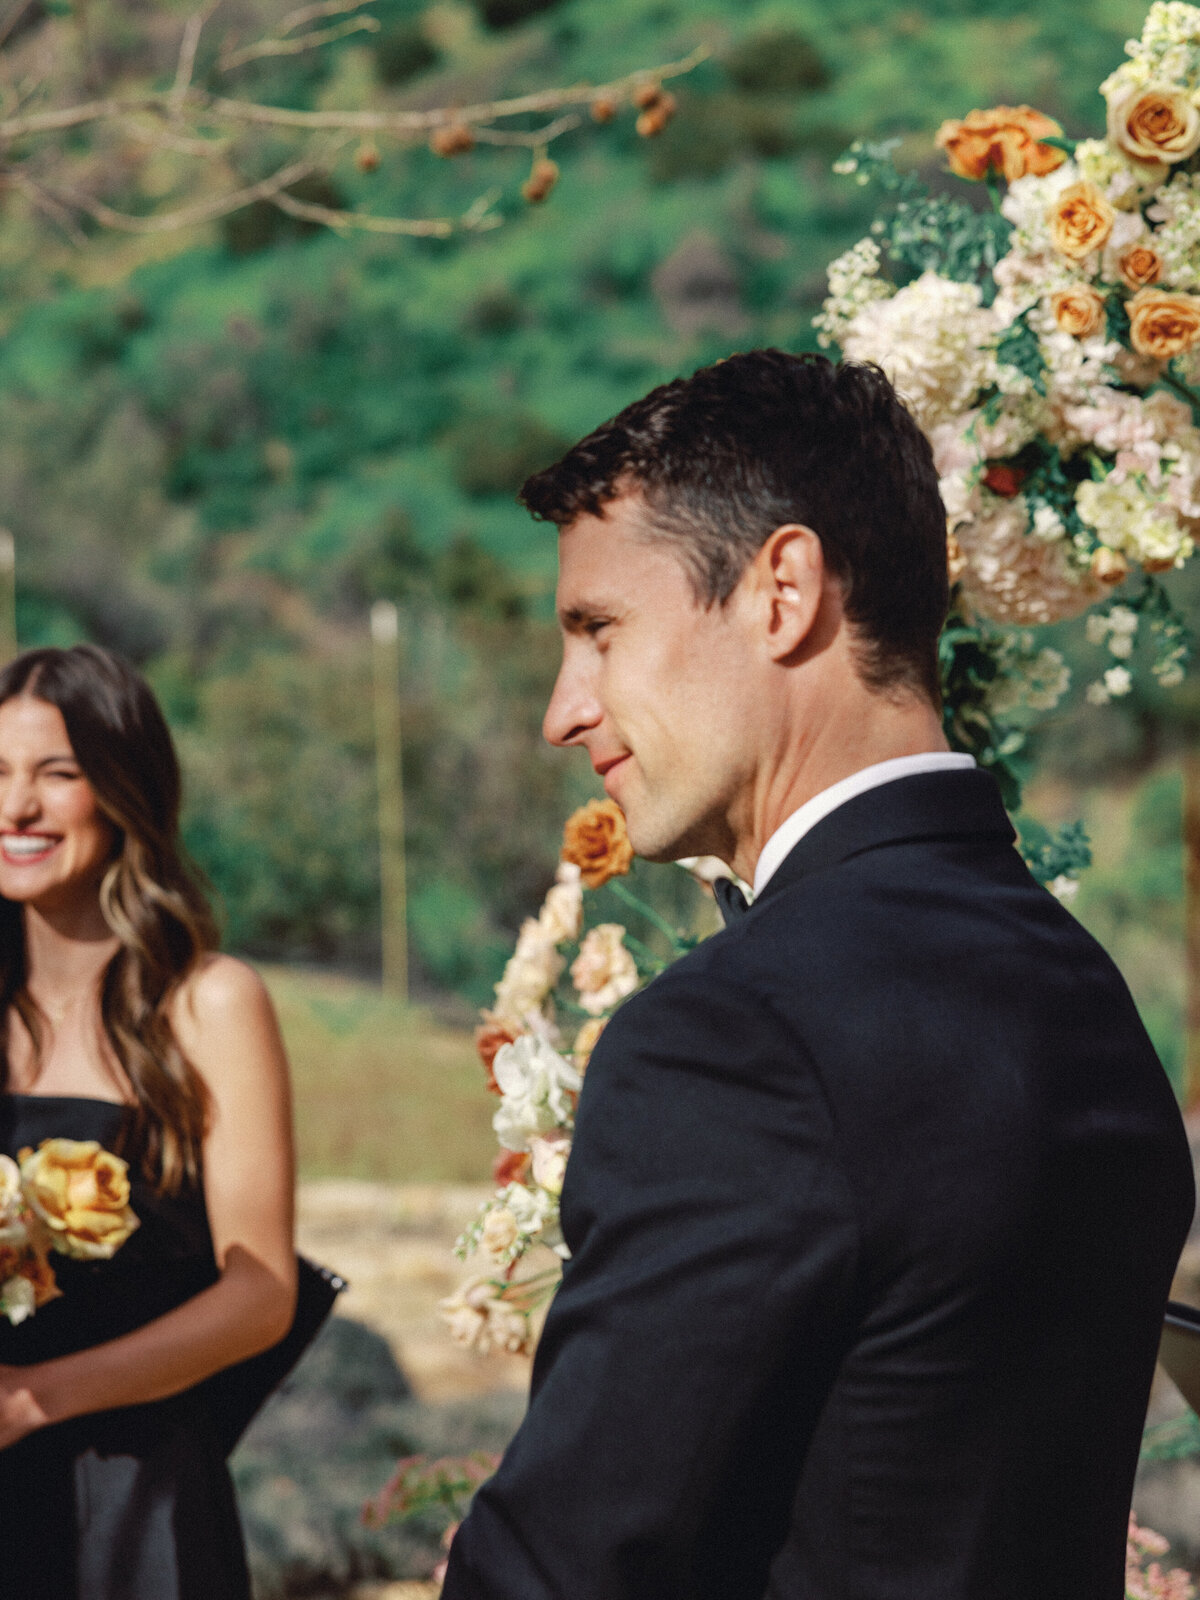 springtime-ceremony-ideas-for-outdoor-wedding-in-california-10